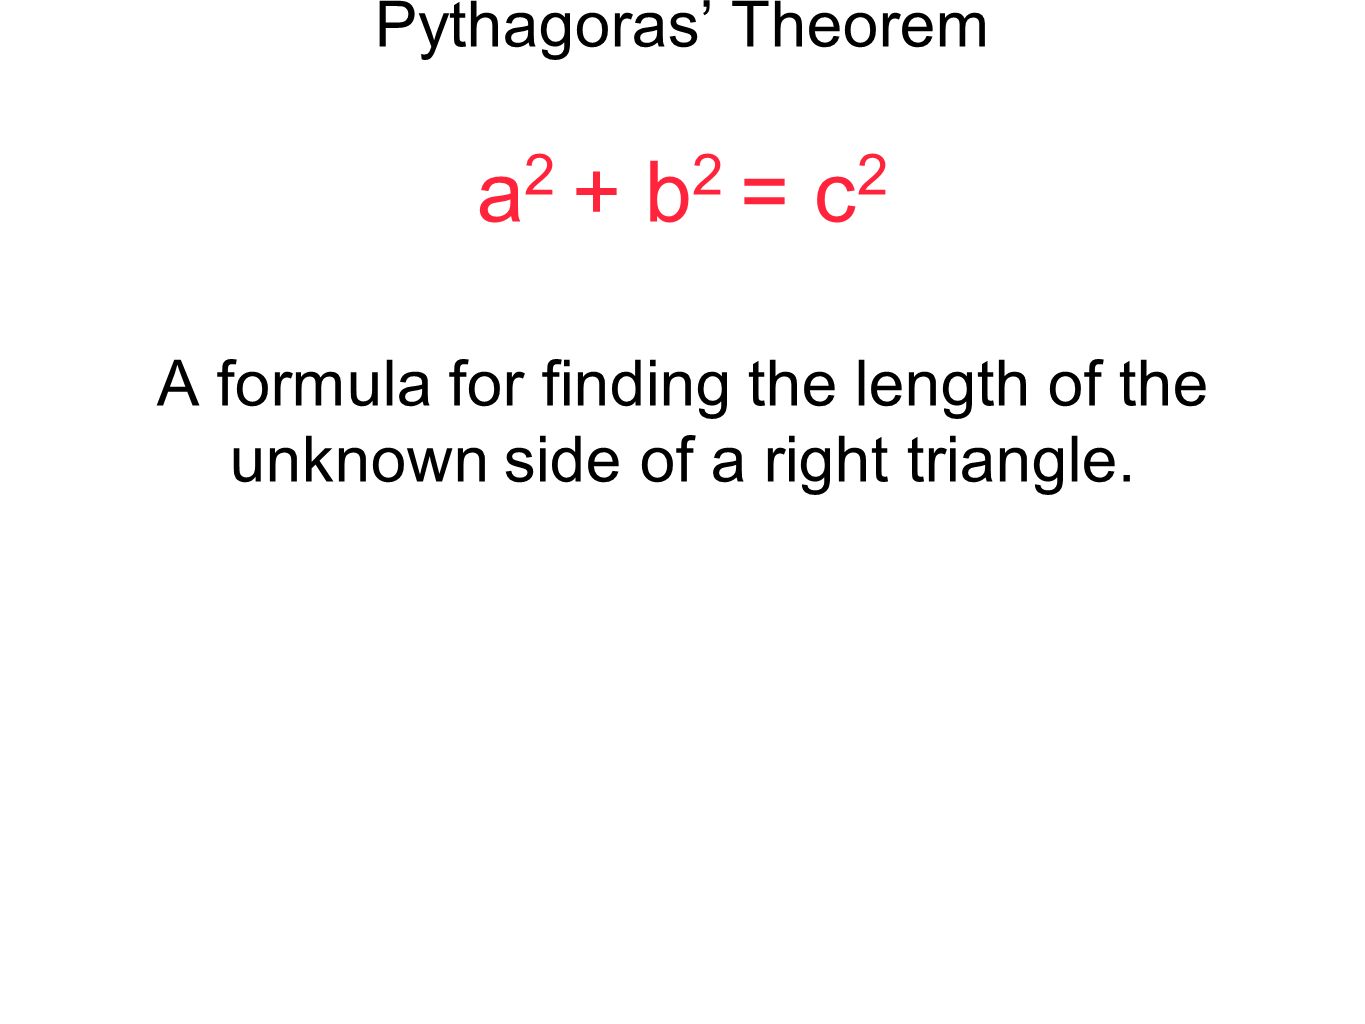 pythagoras of samos birth and death